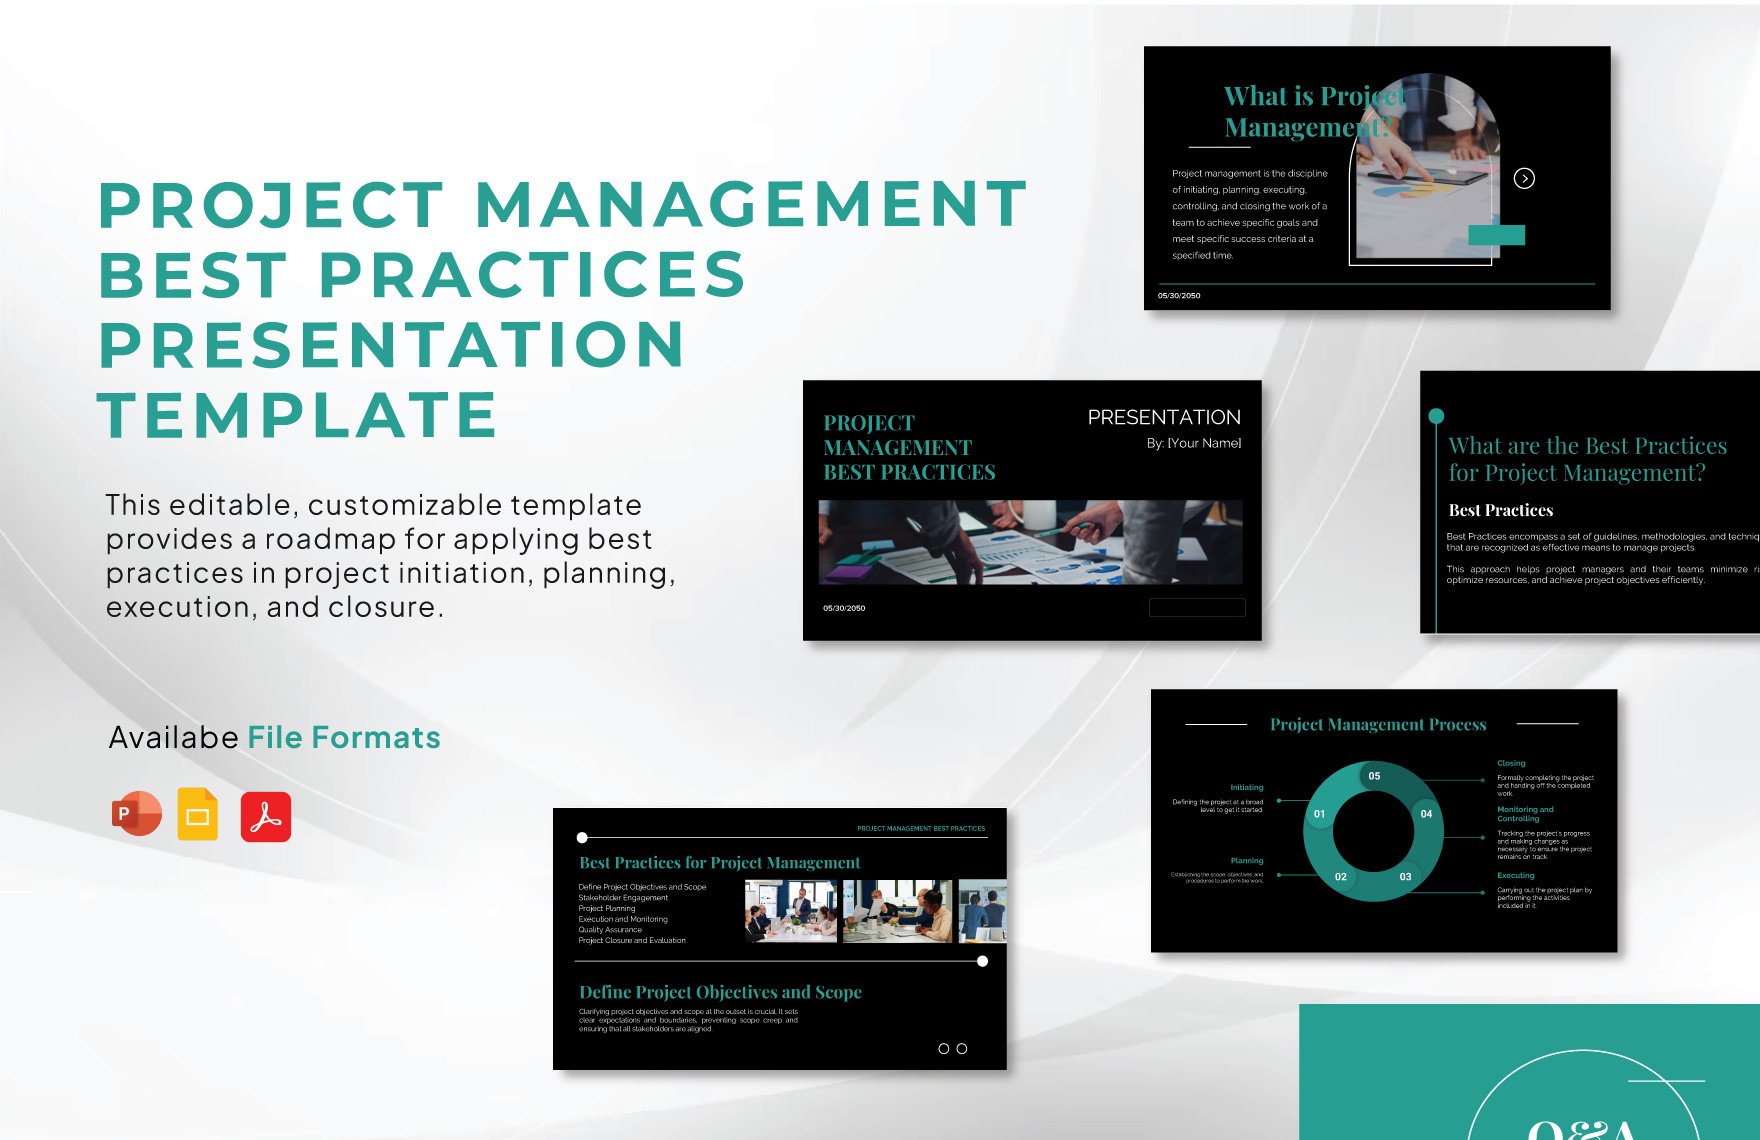 Project Management Best Practices Presentation Template